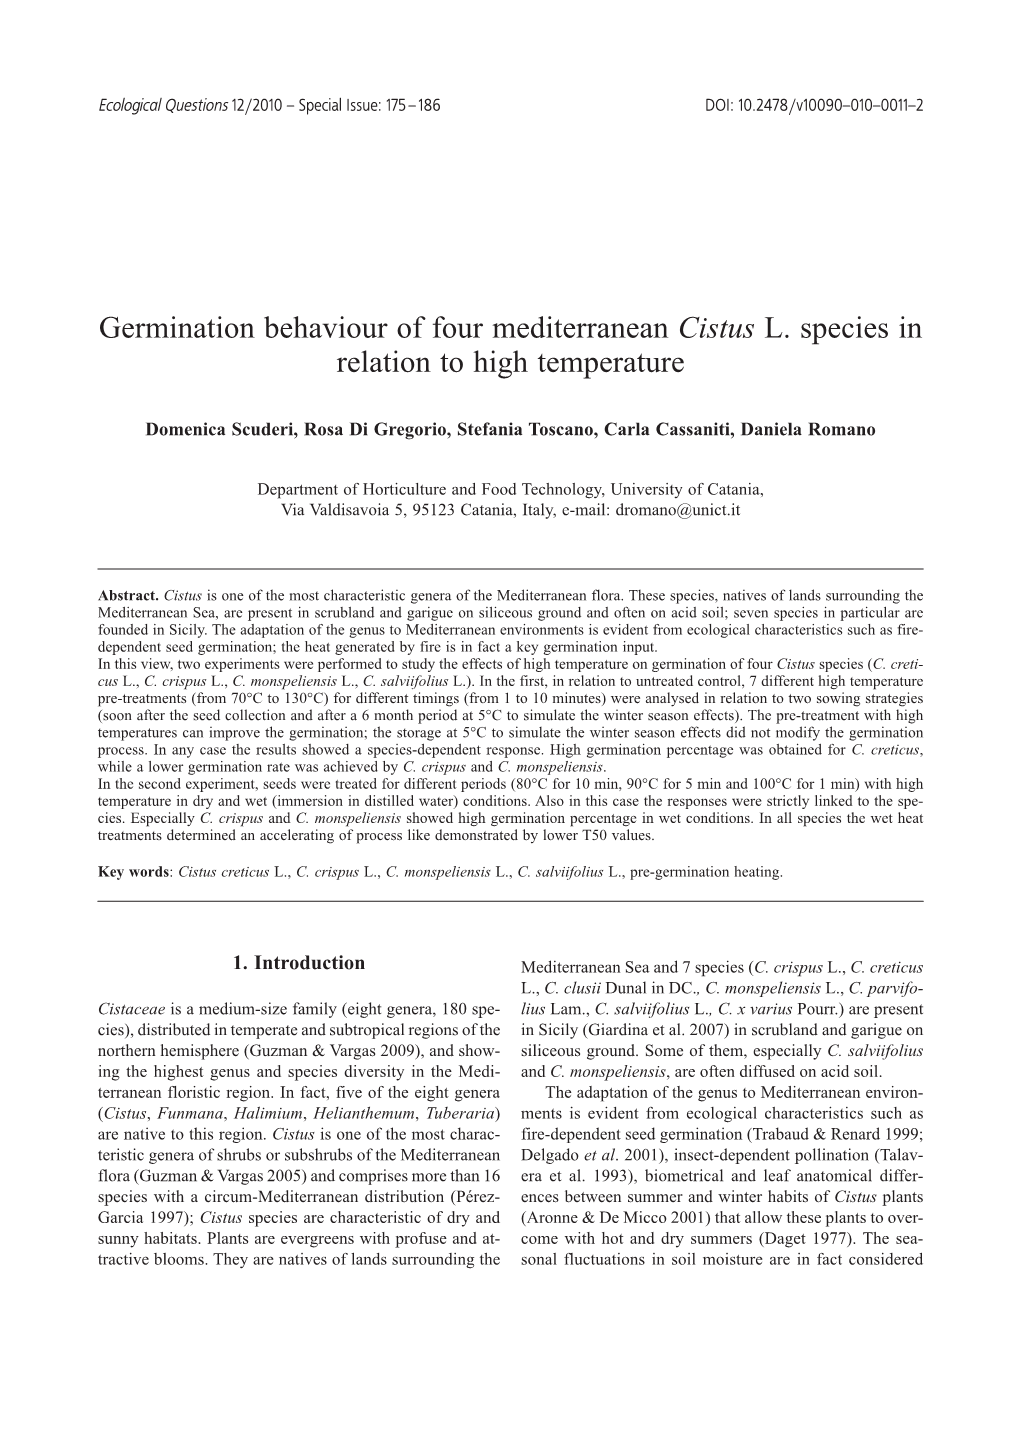 Germination Behaviour of Four Mediterranean Cistus L. Species in Relation to High Temperature